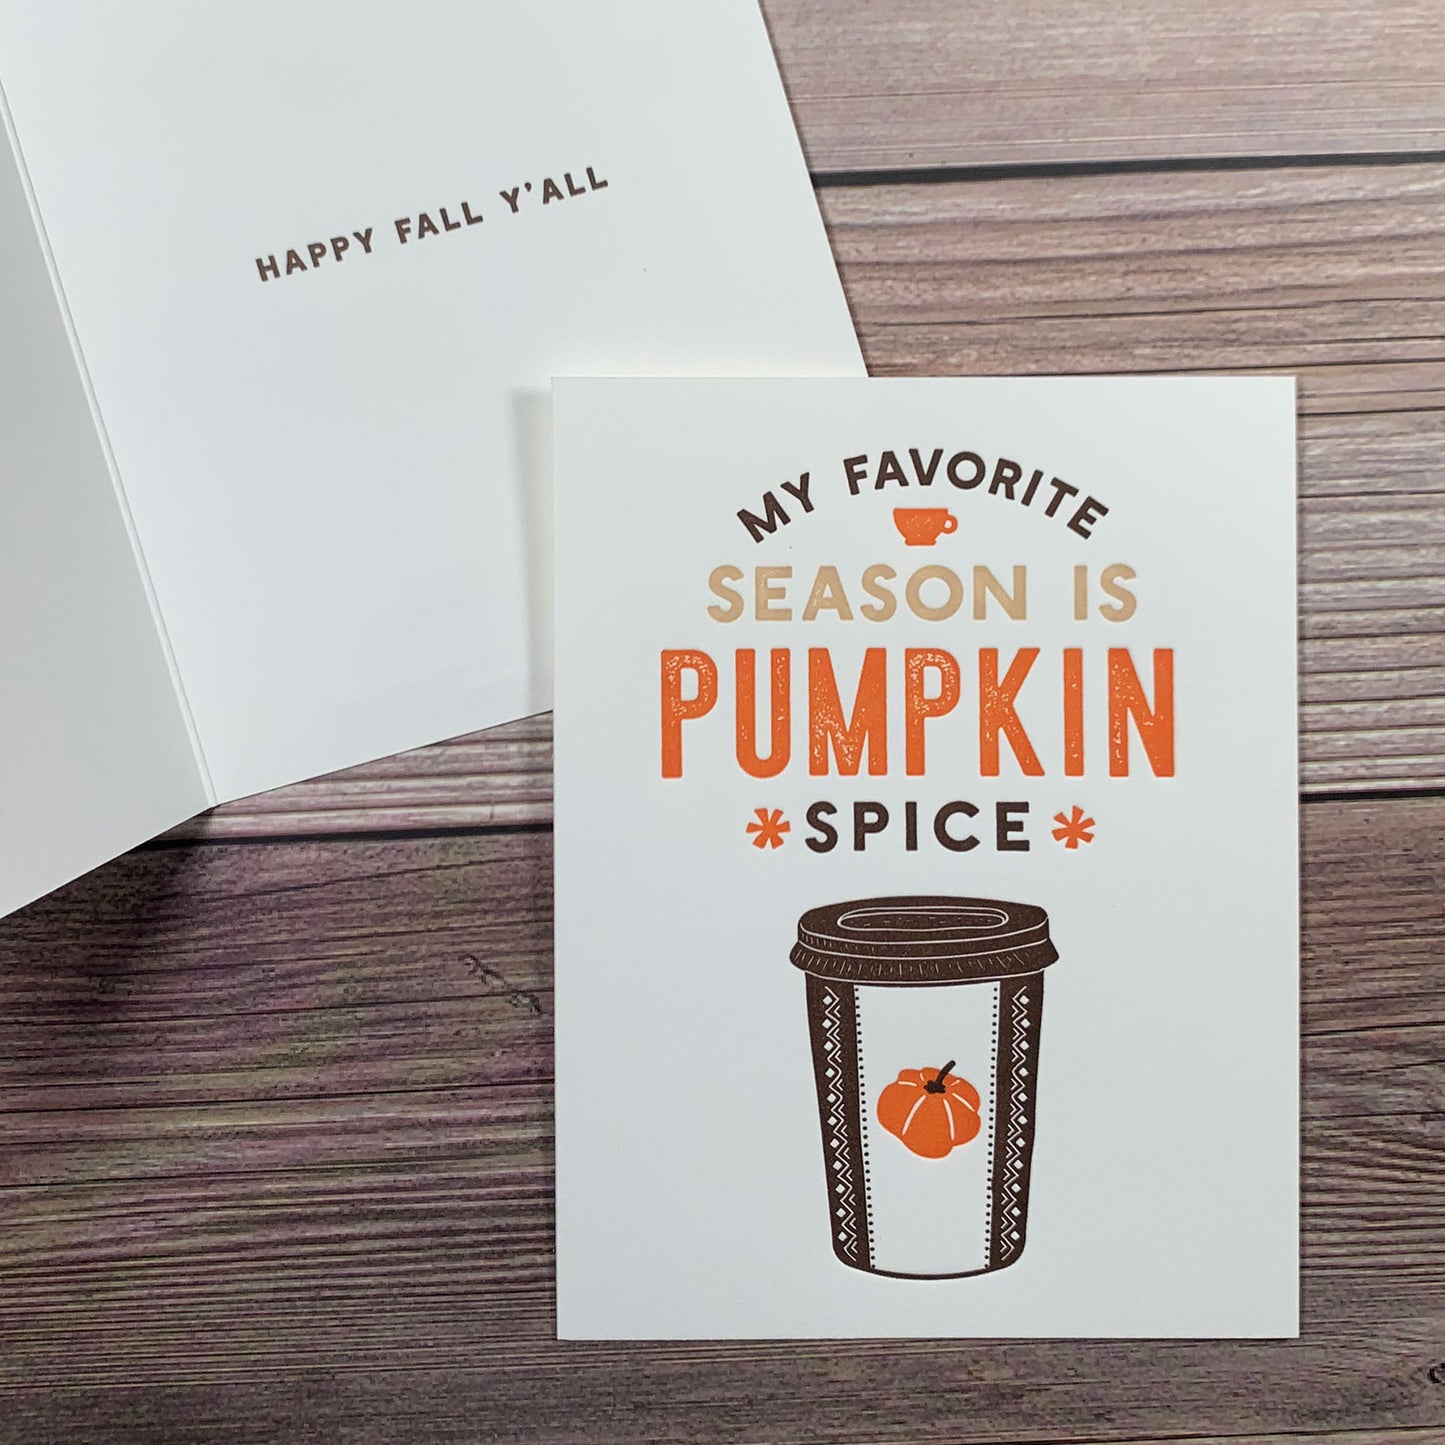 My favorite season is pumpkin spice, Fall greeting Card, pumpkin spice latte, inside message: Happy fall Y'all, Letterpress printed, includes envelope